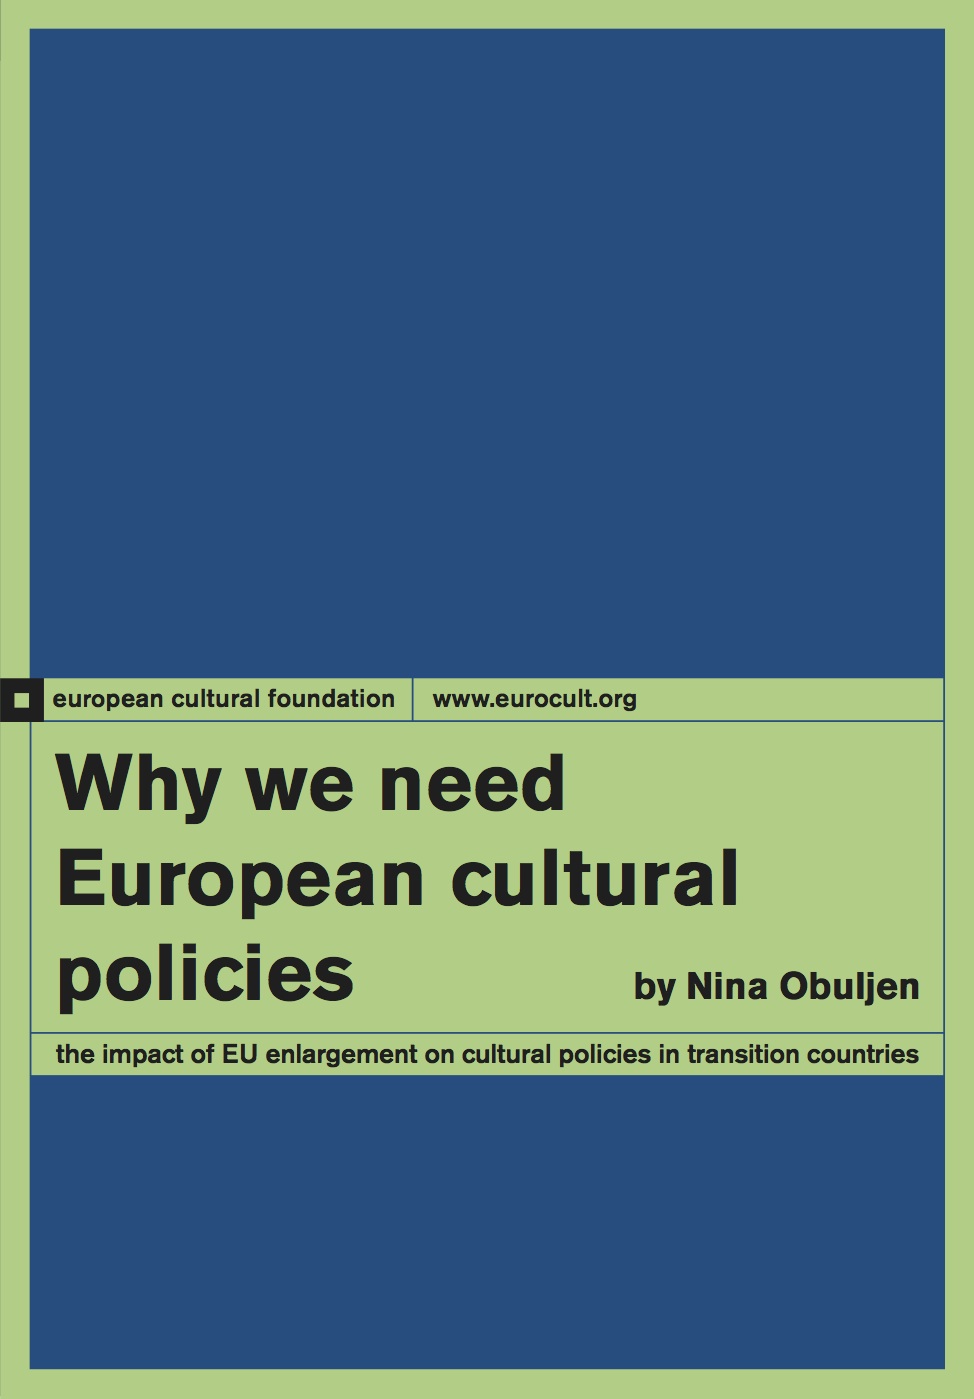 why_we_need_european_cultural_policies.jpg